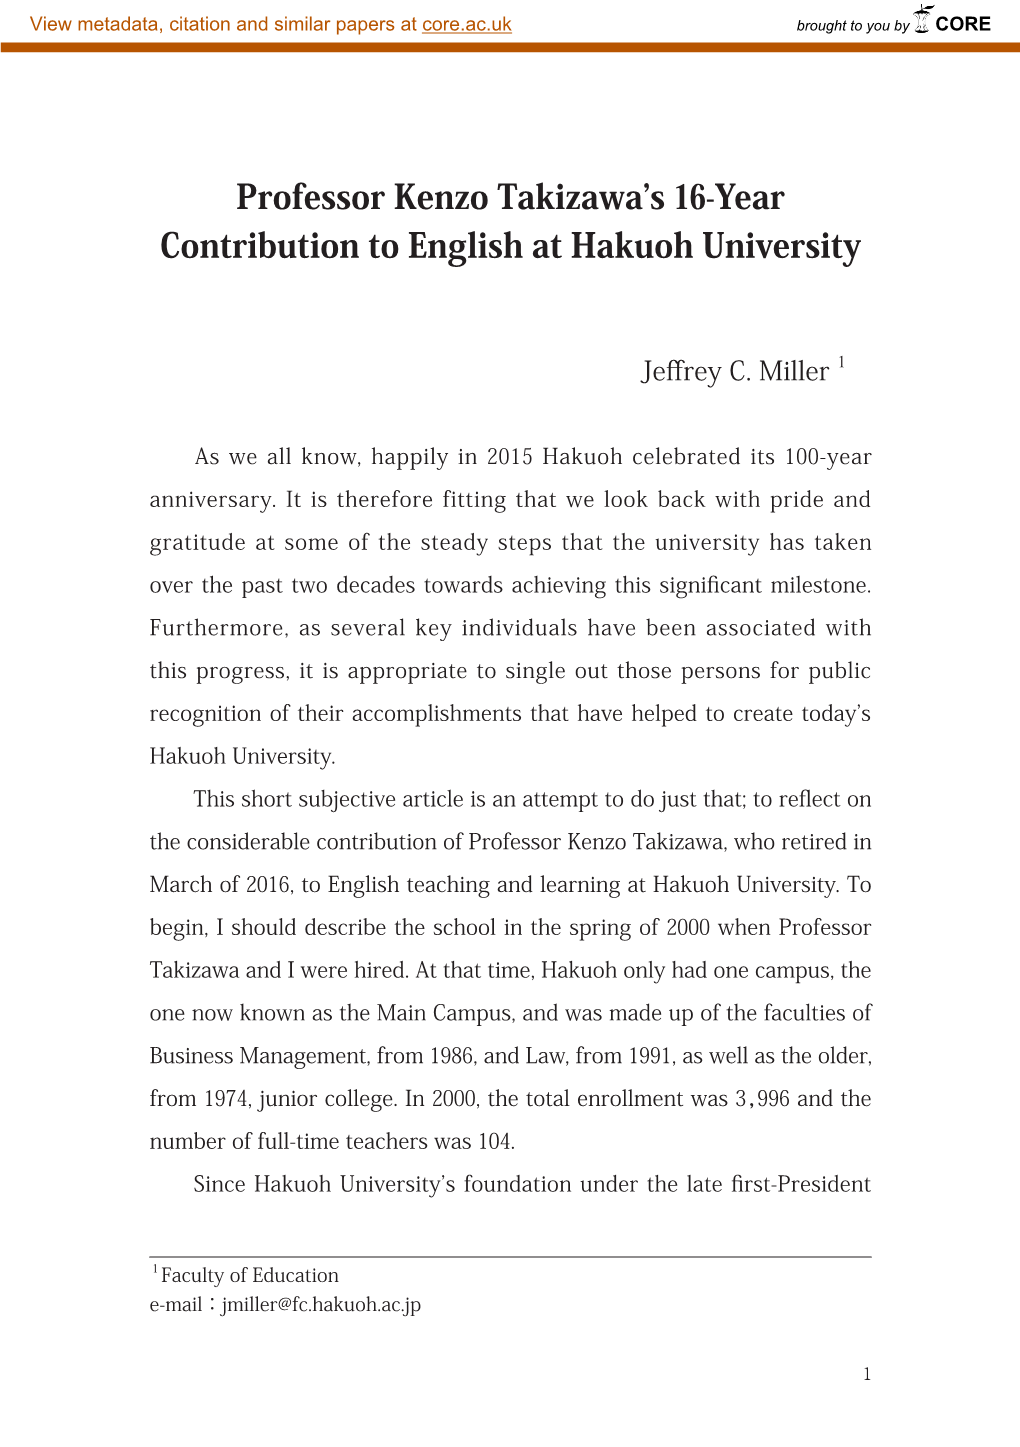 Professor Kenzo Takizawa's 16-Year Contribution to English at Hakuoh